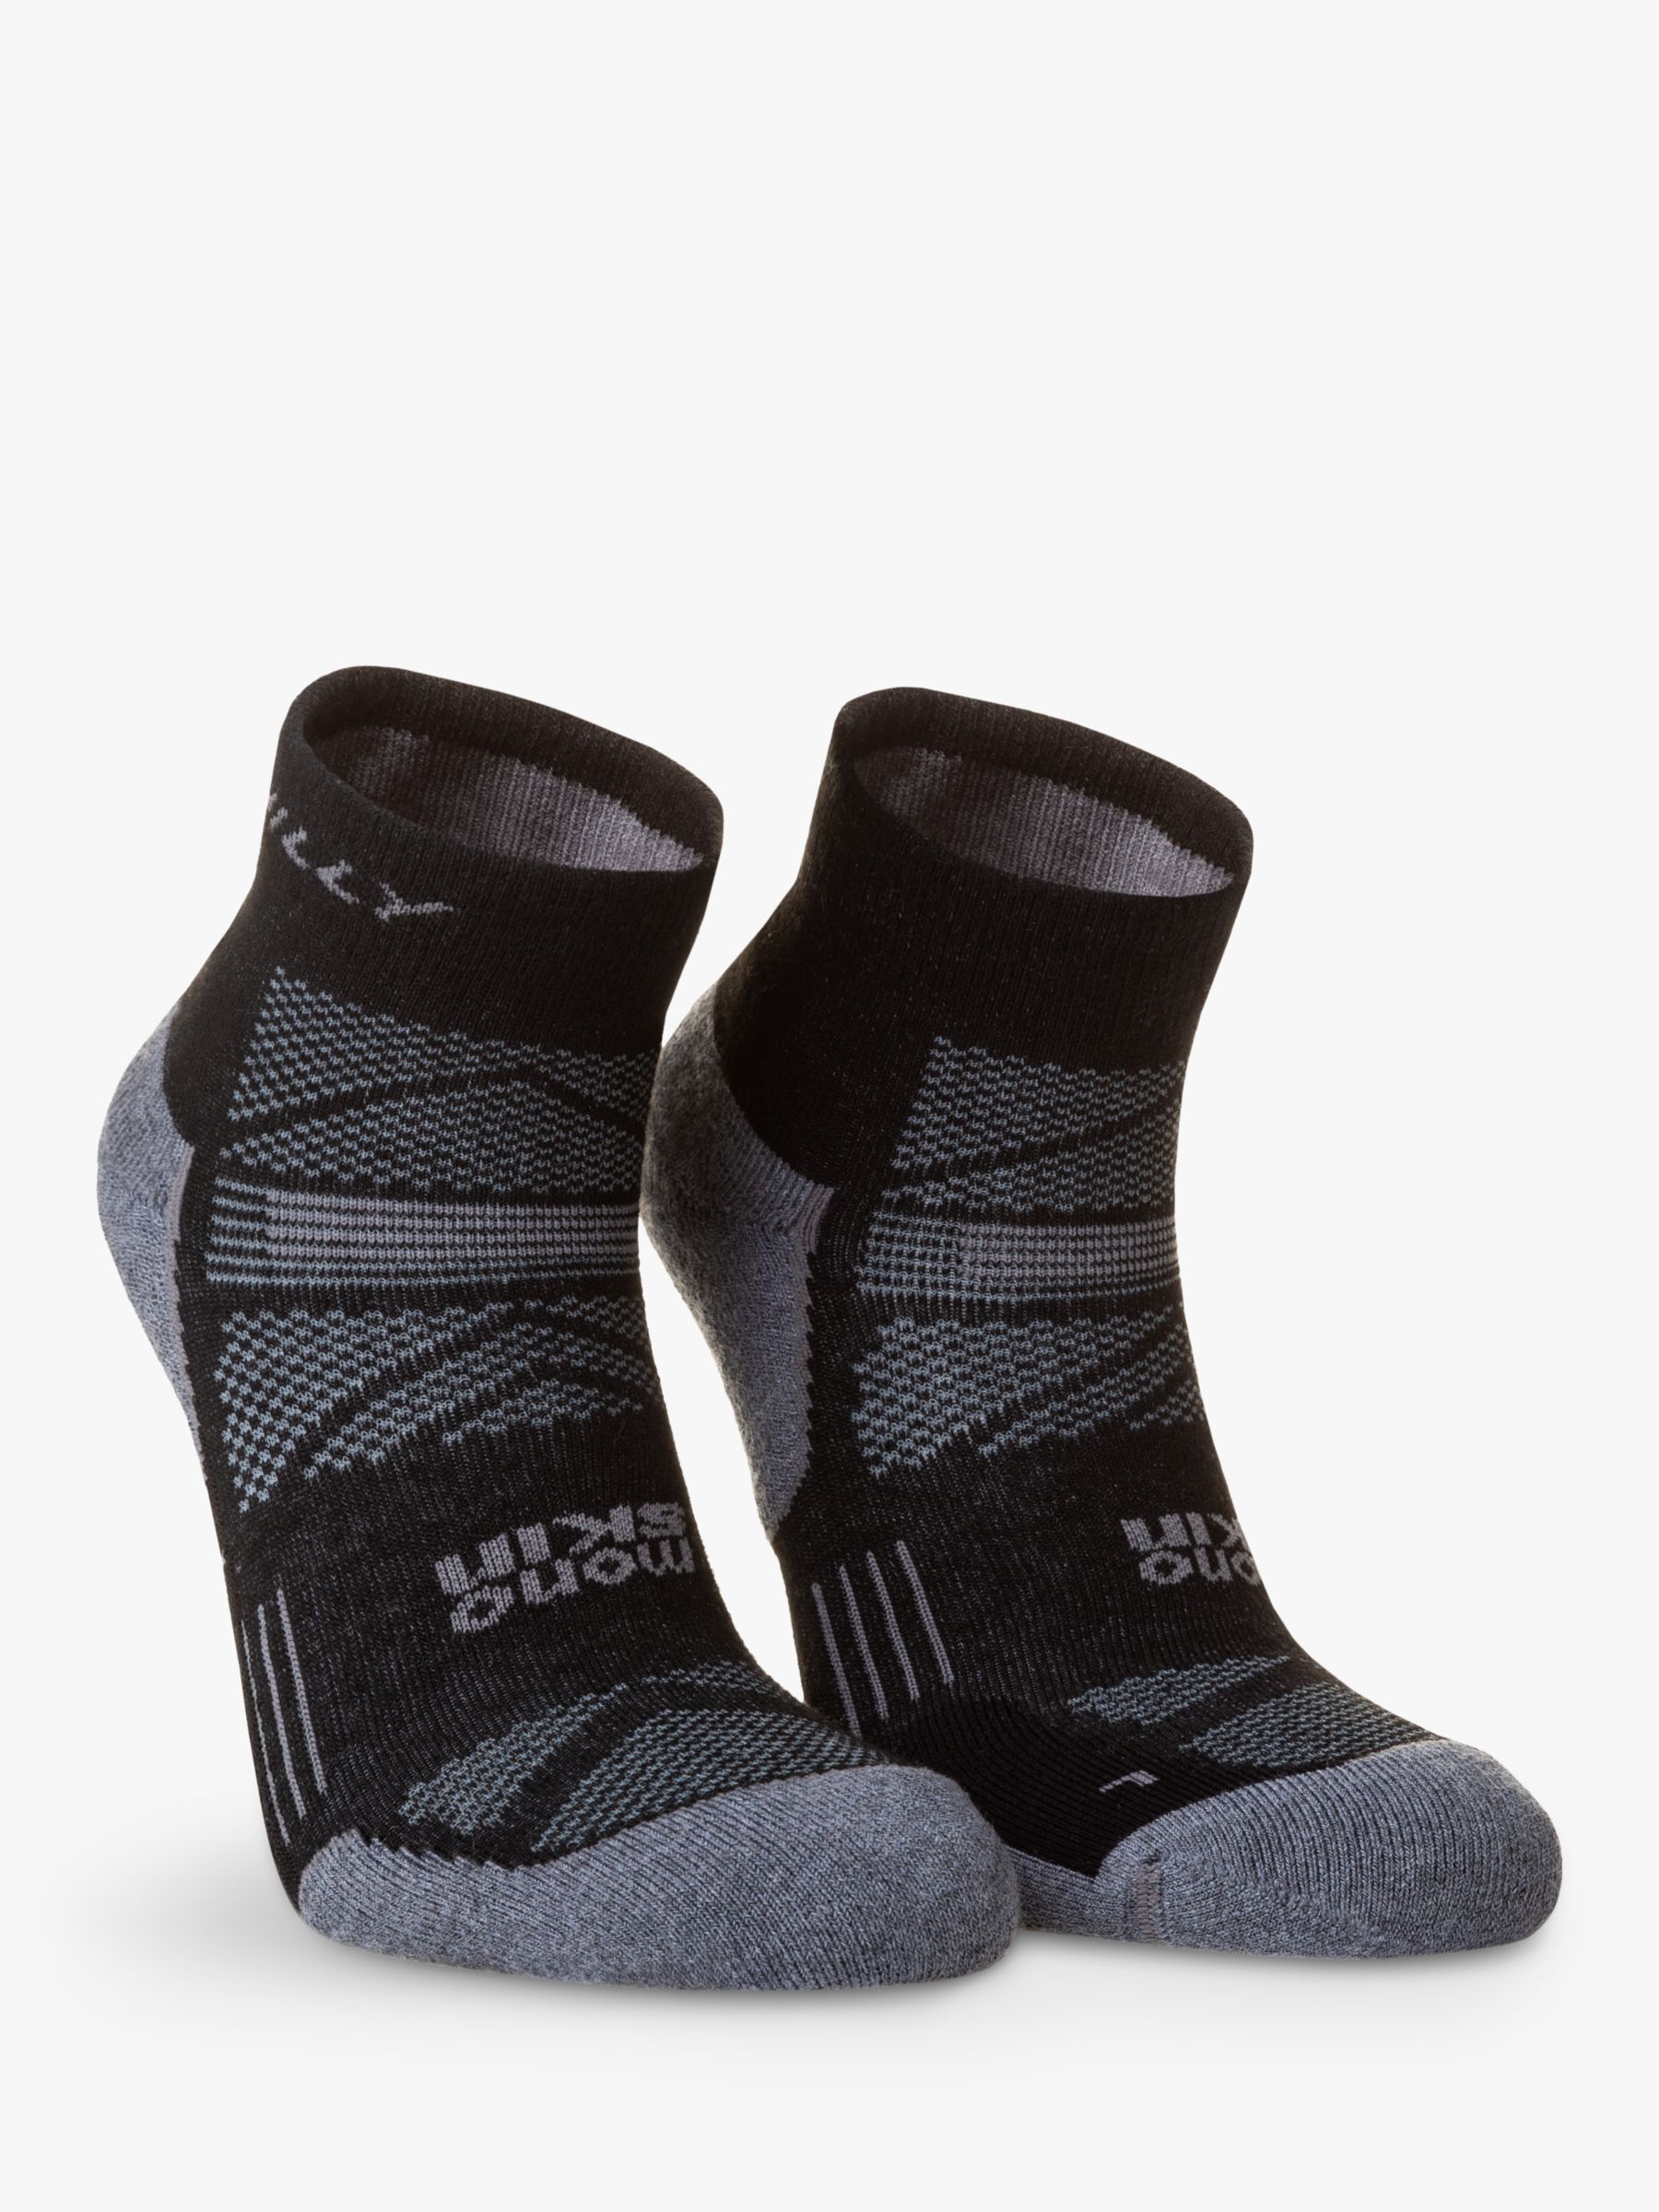 Buy Supreme Socks online - 3 products